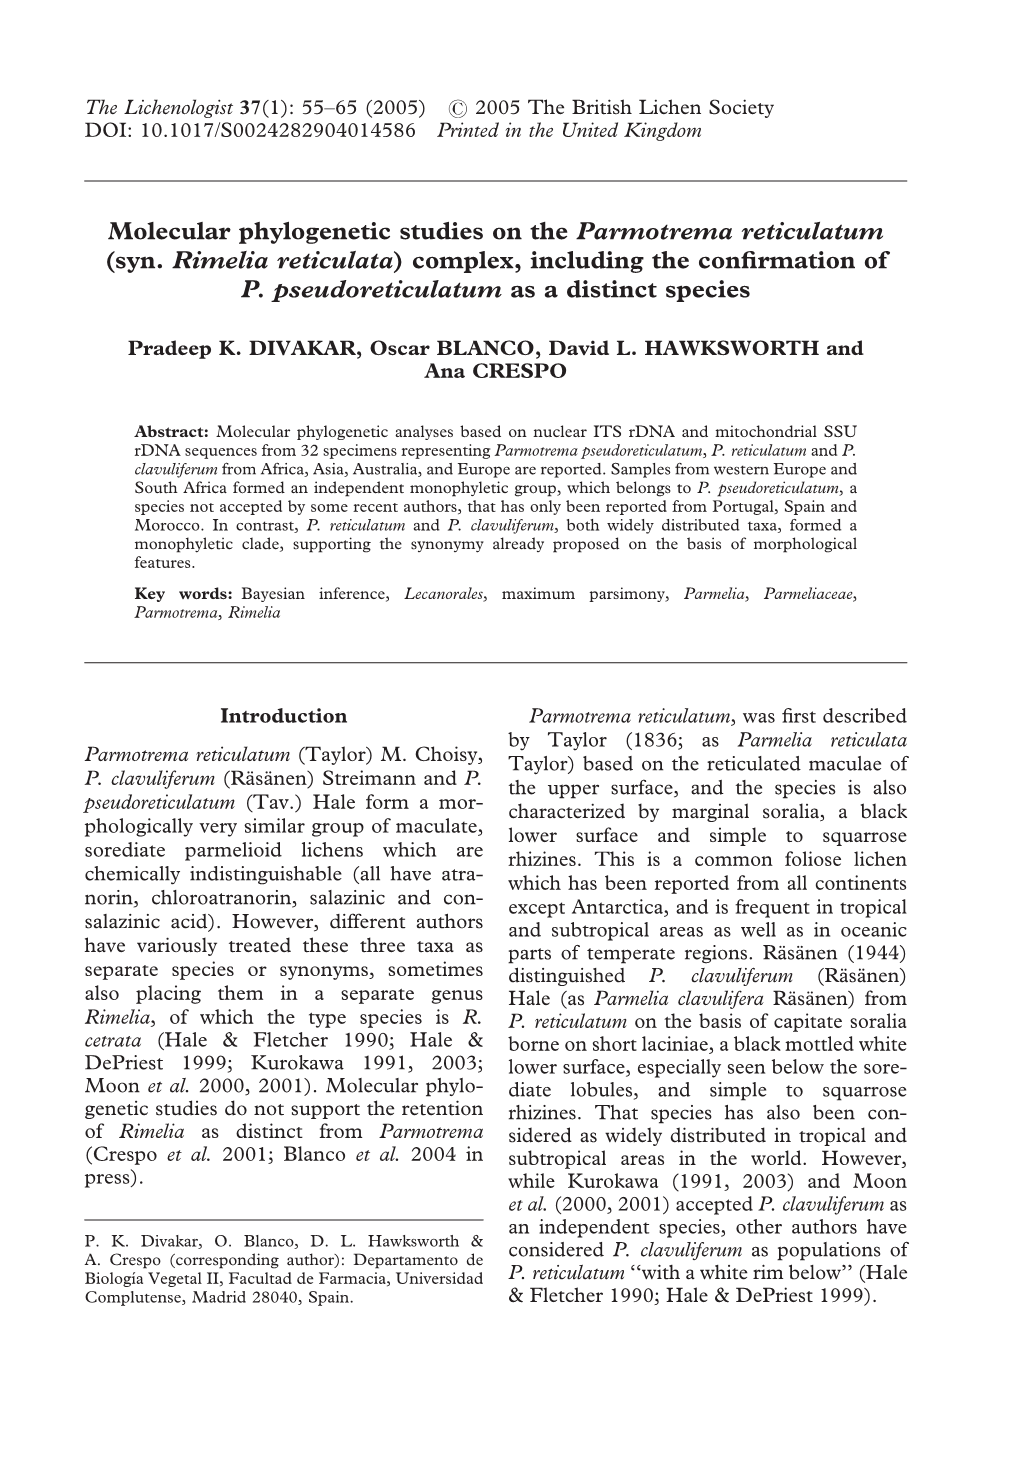 Molecular Phylogenetic Studies on the Parmotrema Reticulatum (Syn